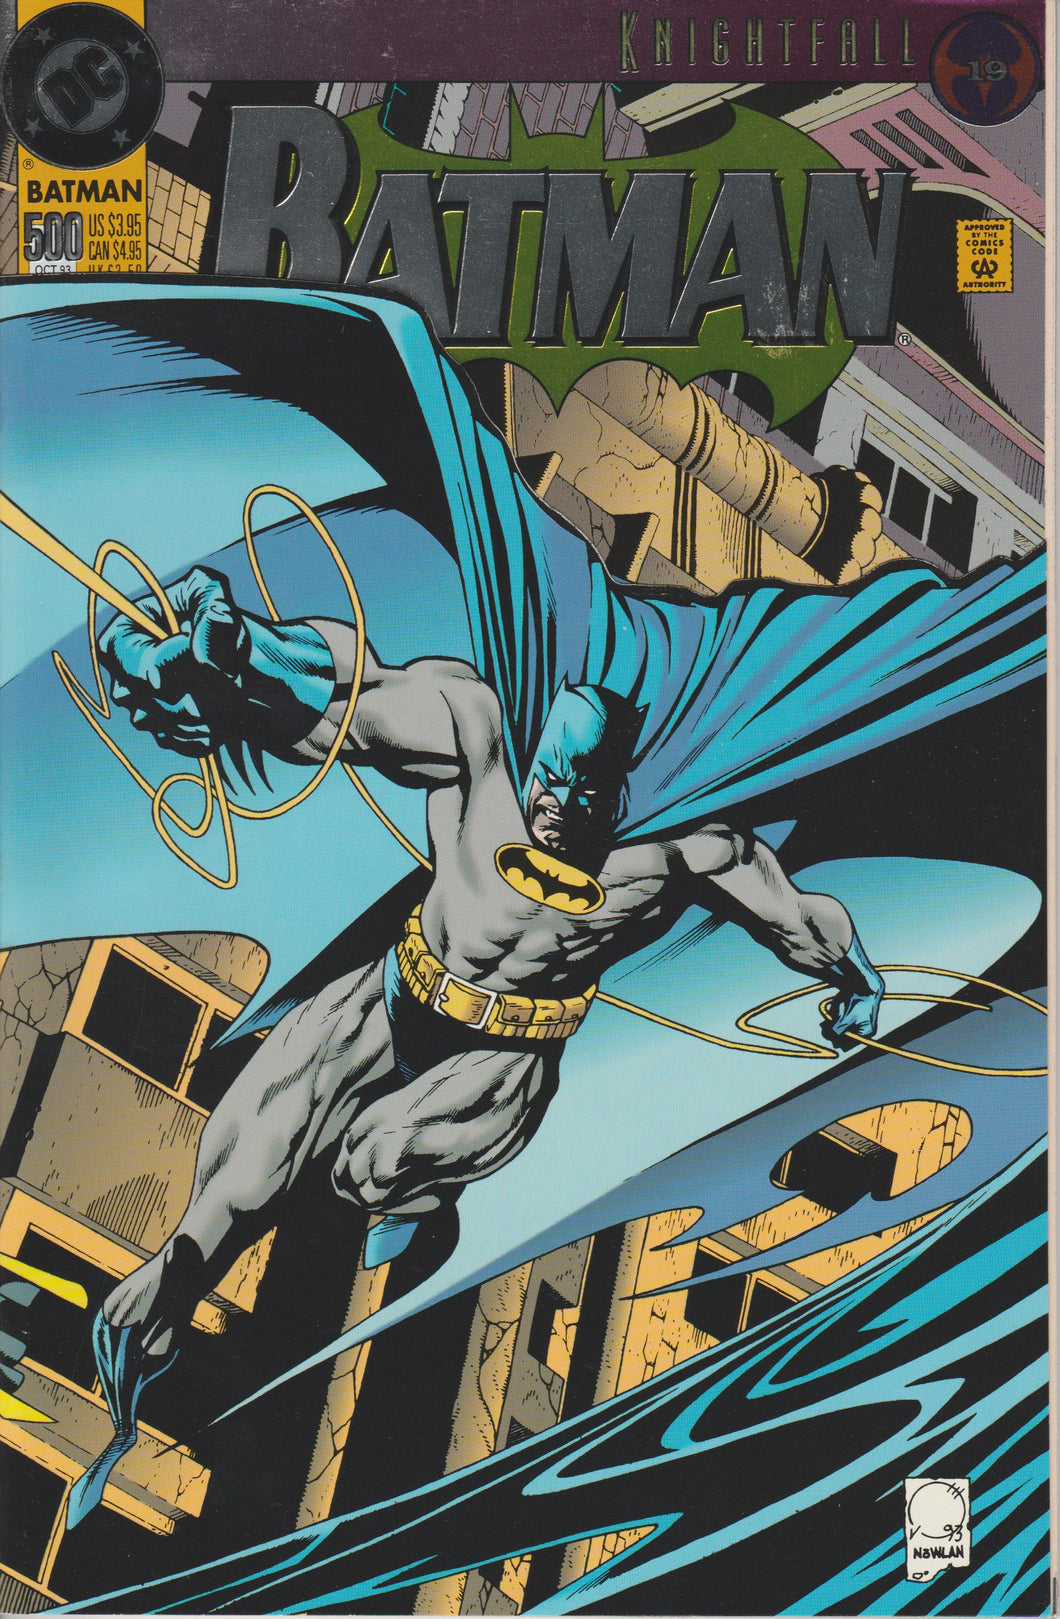 Batman 500 (Foil Cover) Key Issue